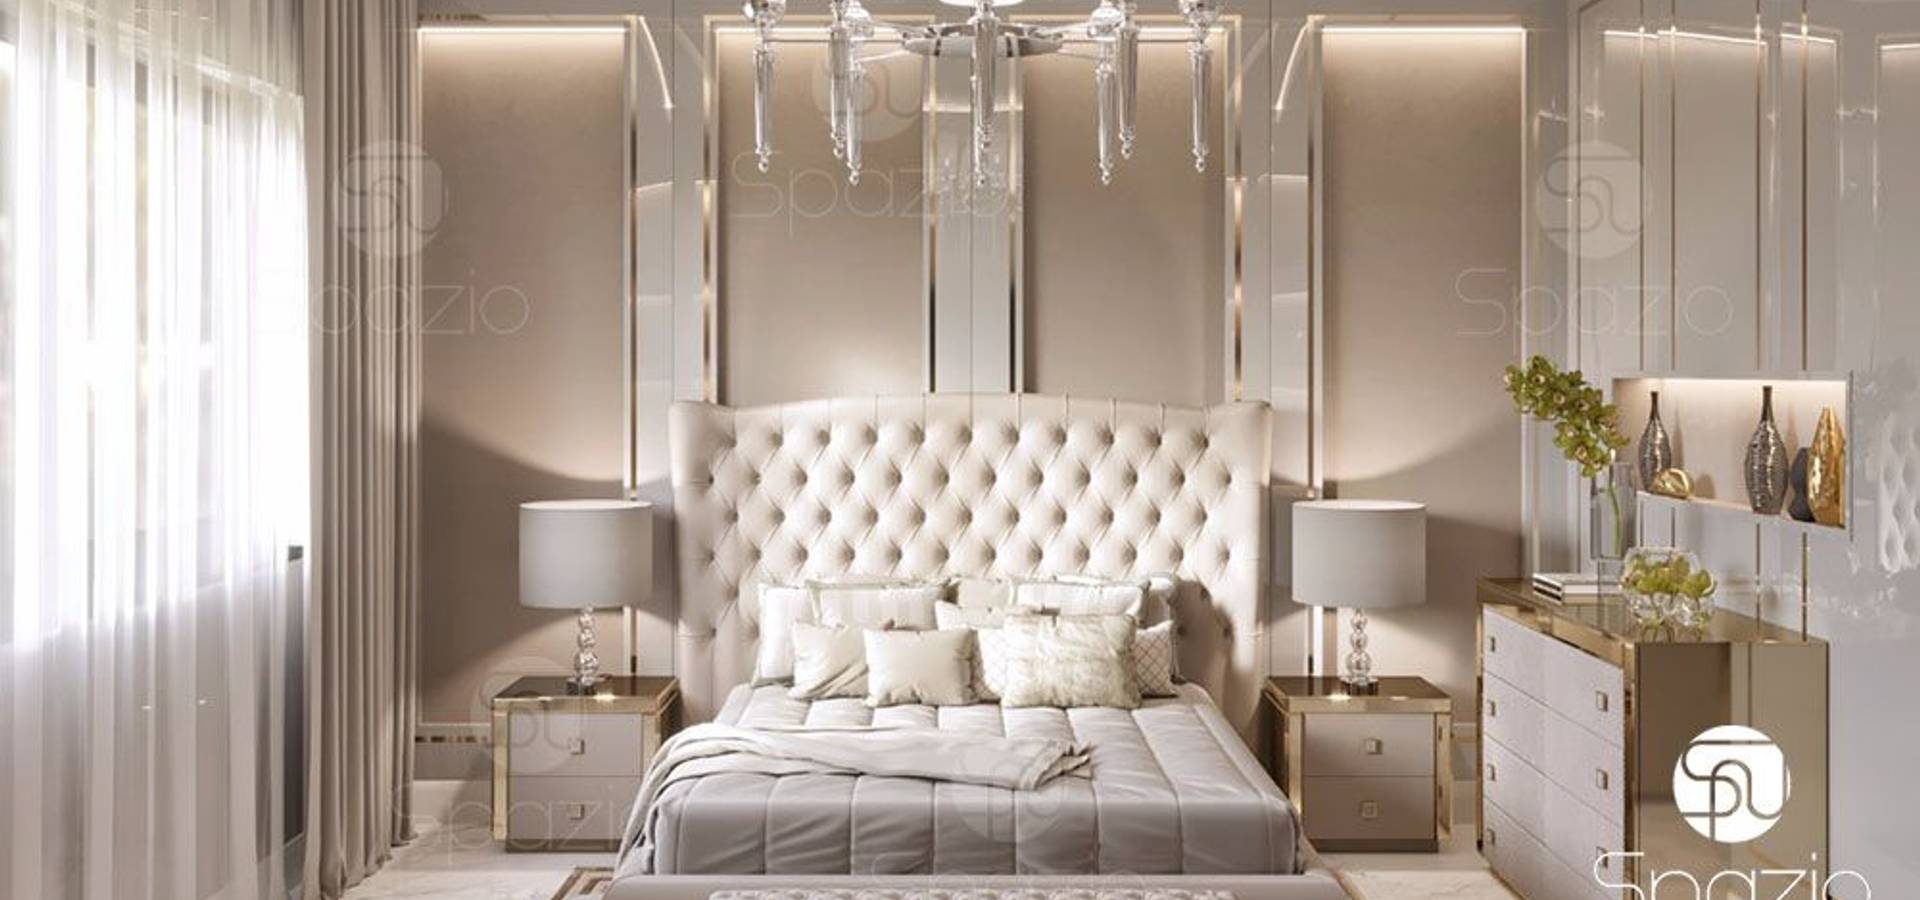 Luxury Modern Master Bedroom Interior Design And Decor In